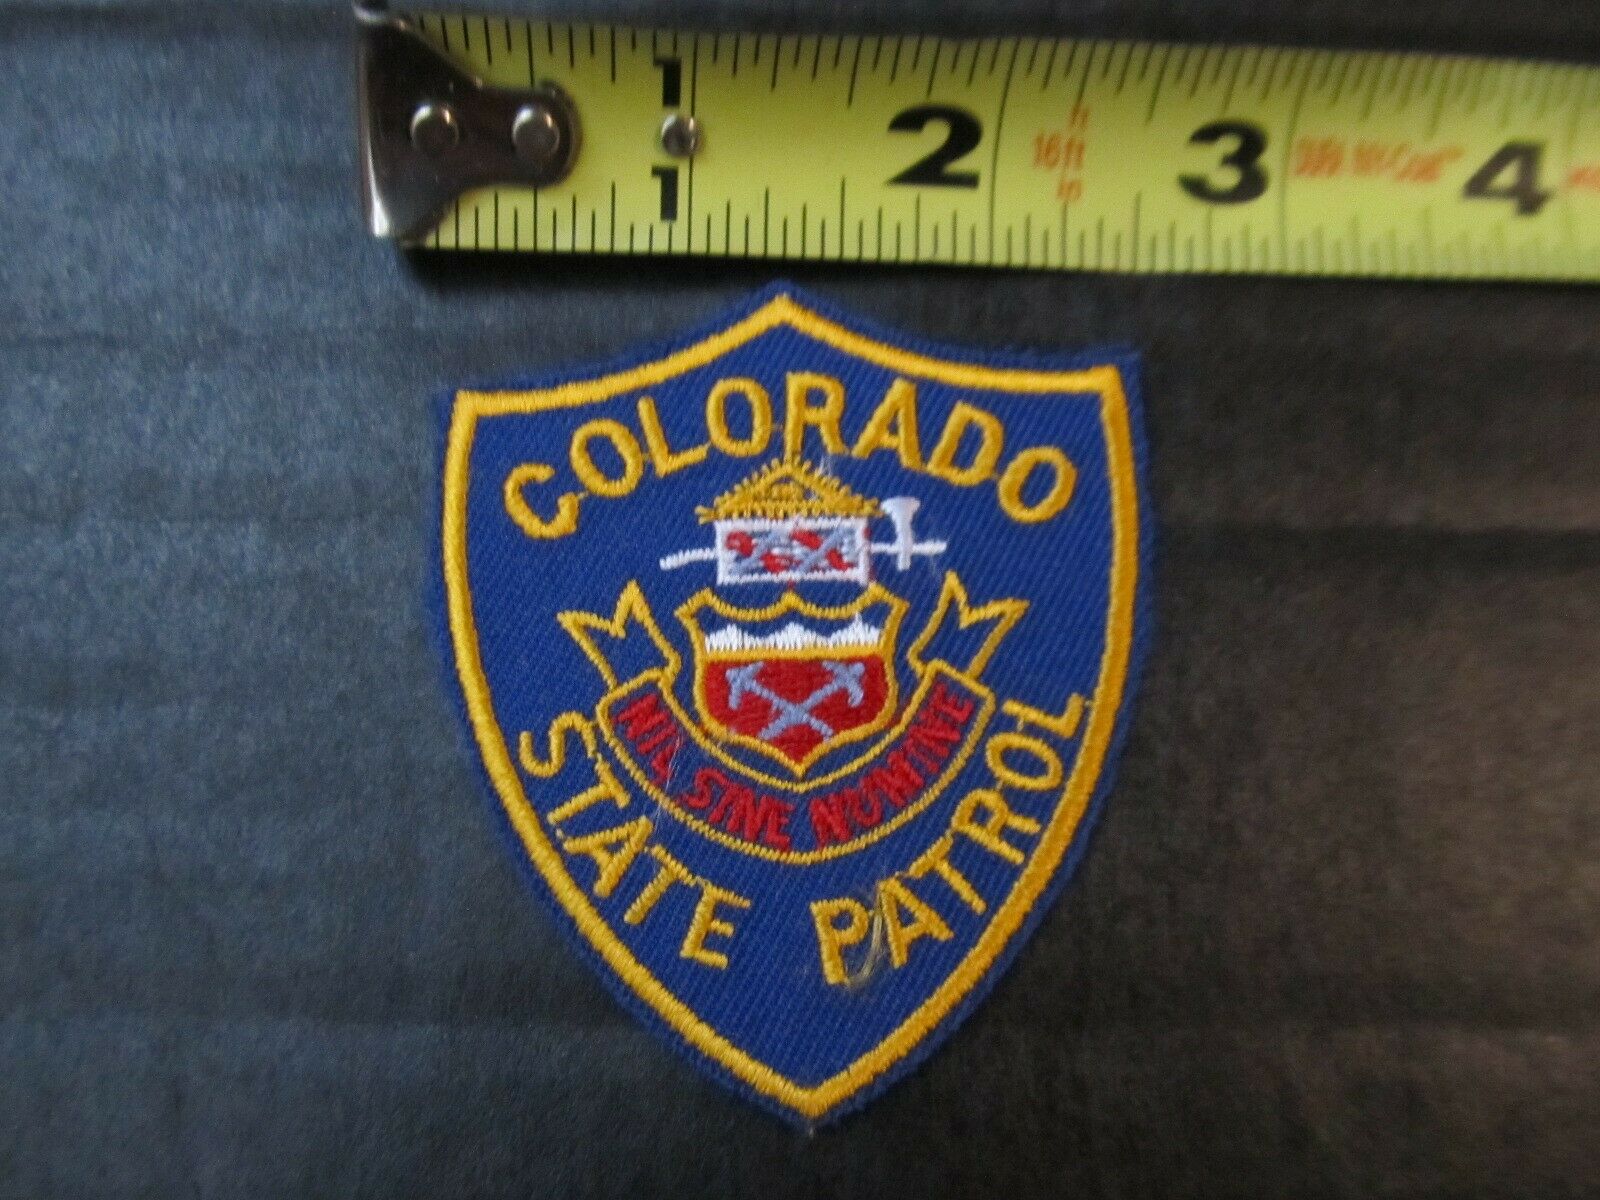 Vintage Colorado State Police Patch Obsolete